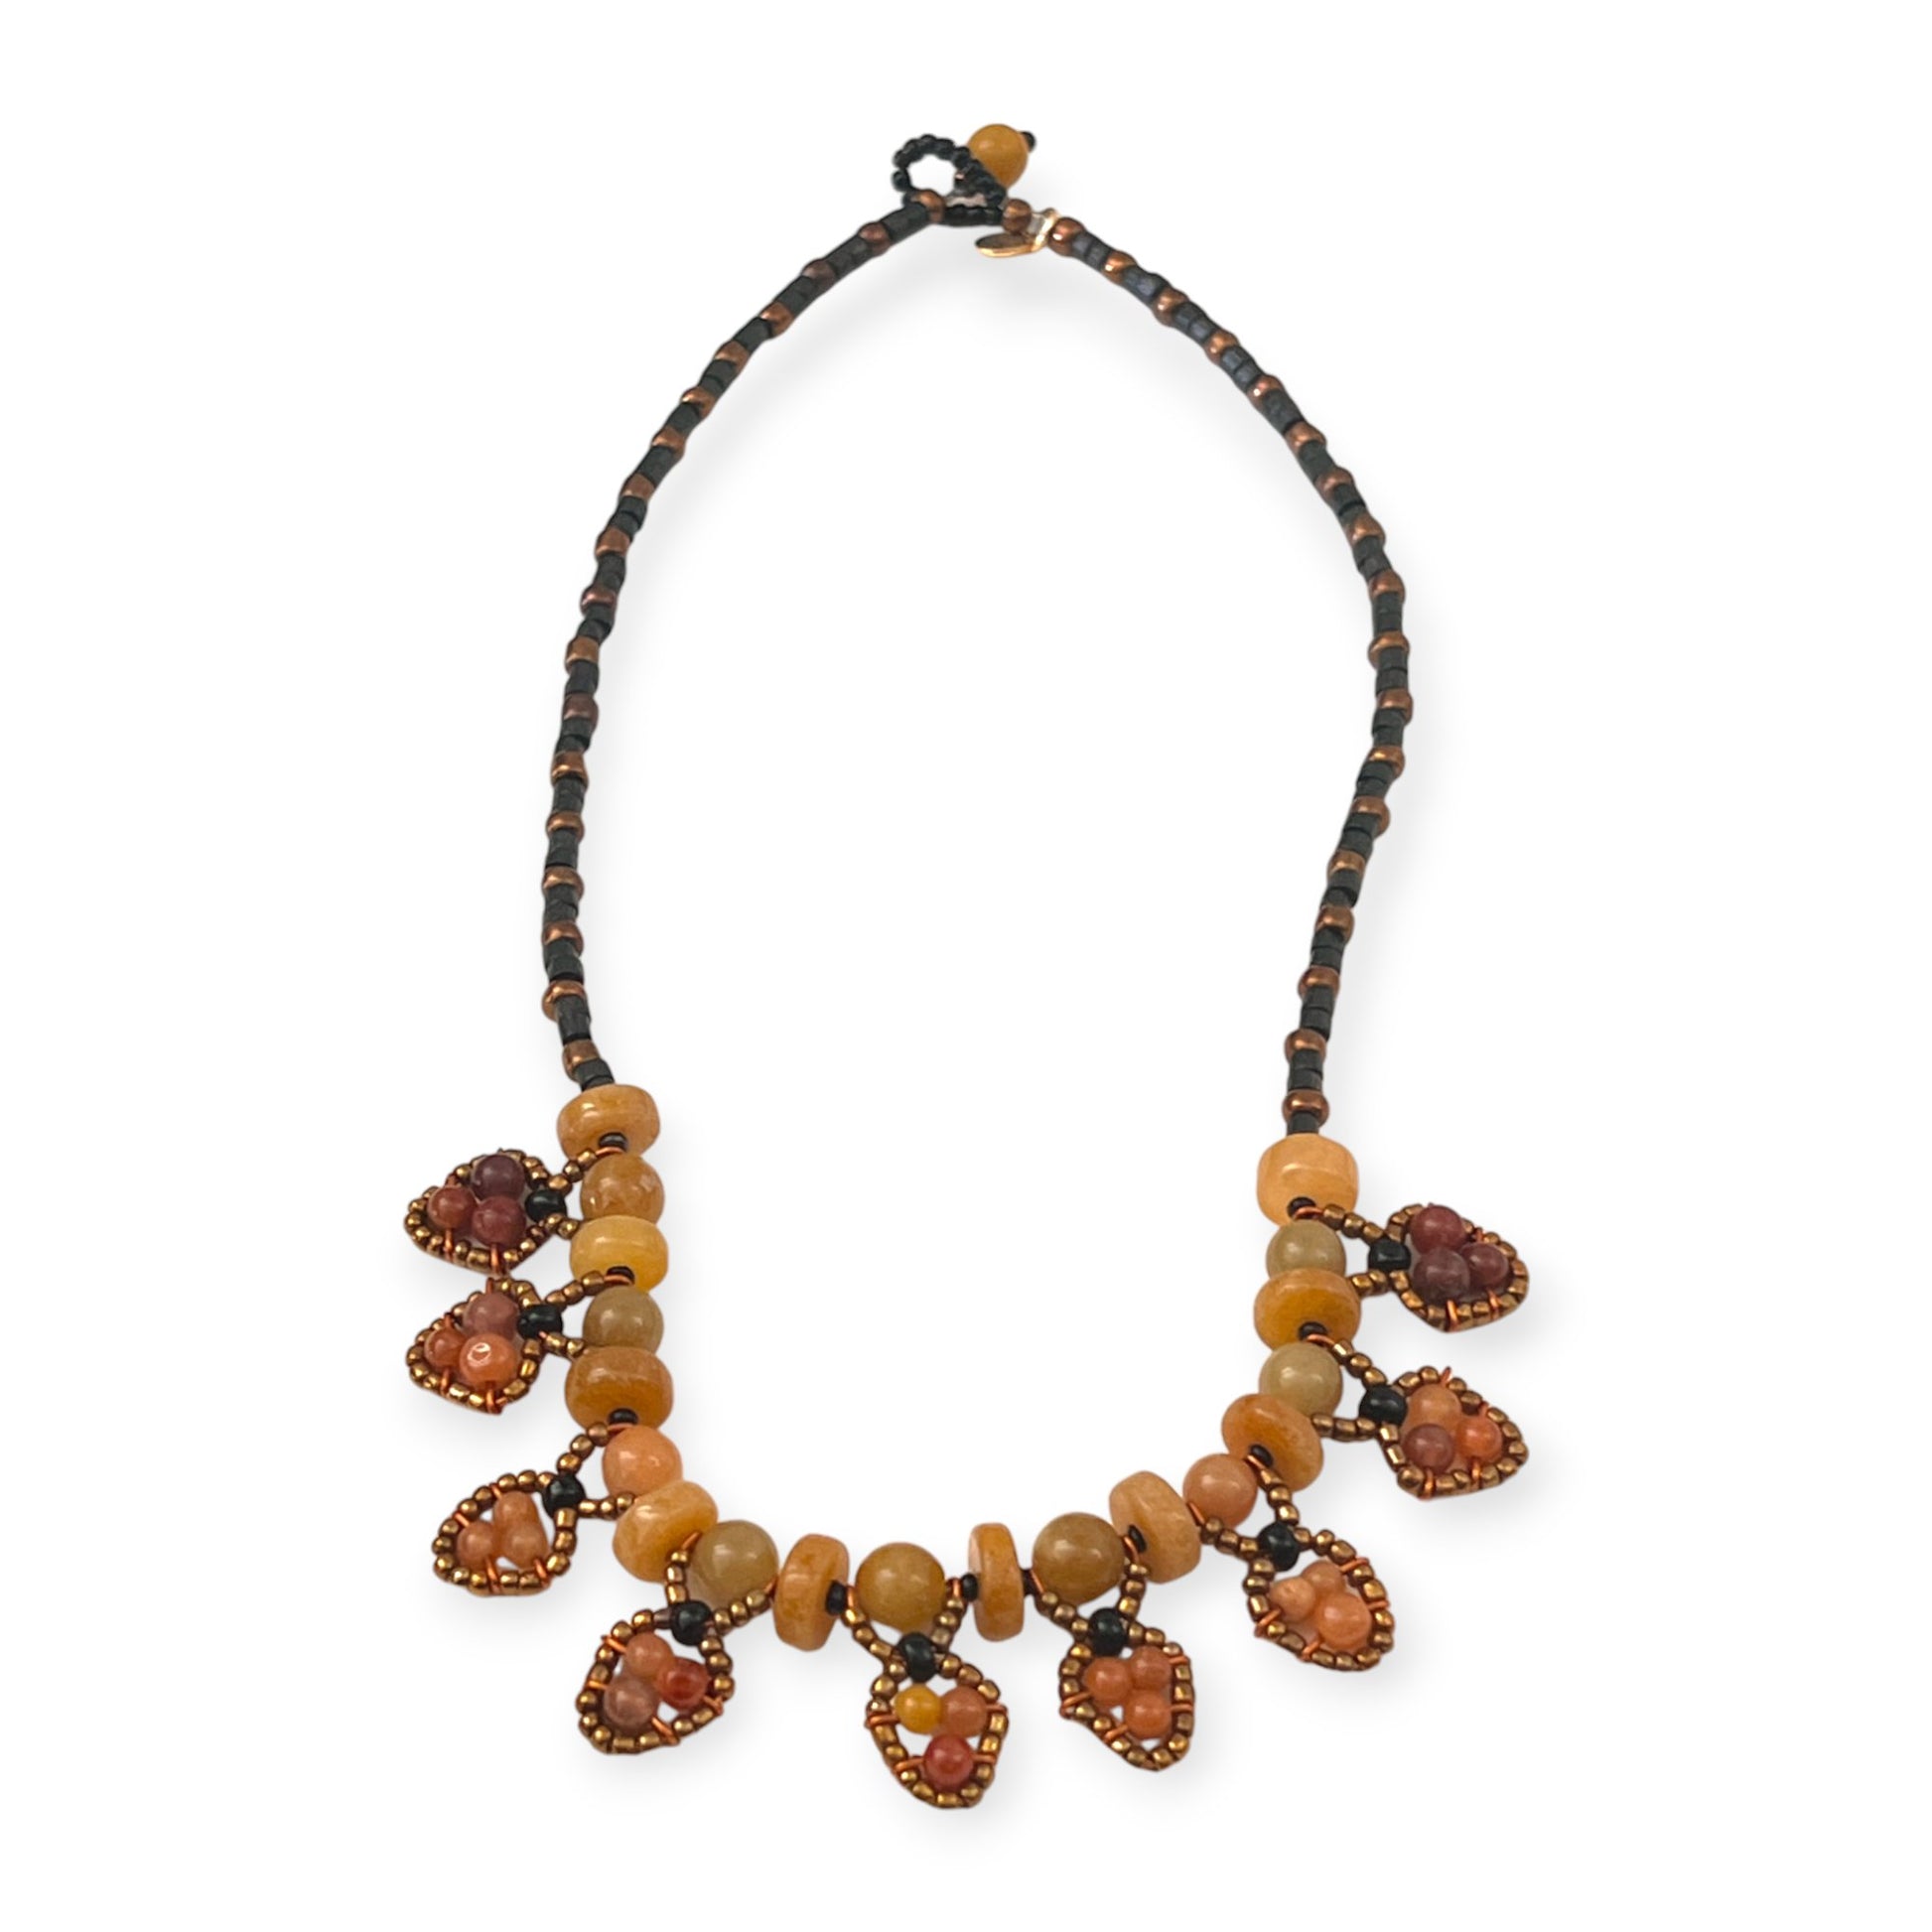 Tribal inspired agate necklace - Sundara Joon